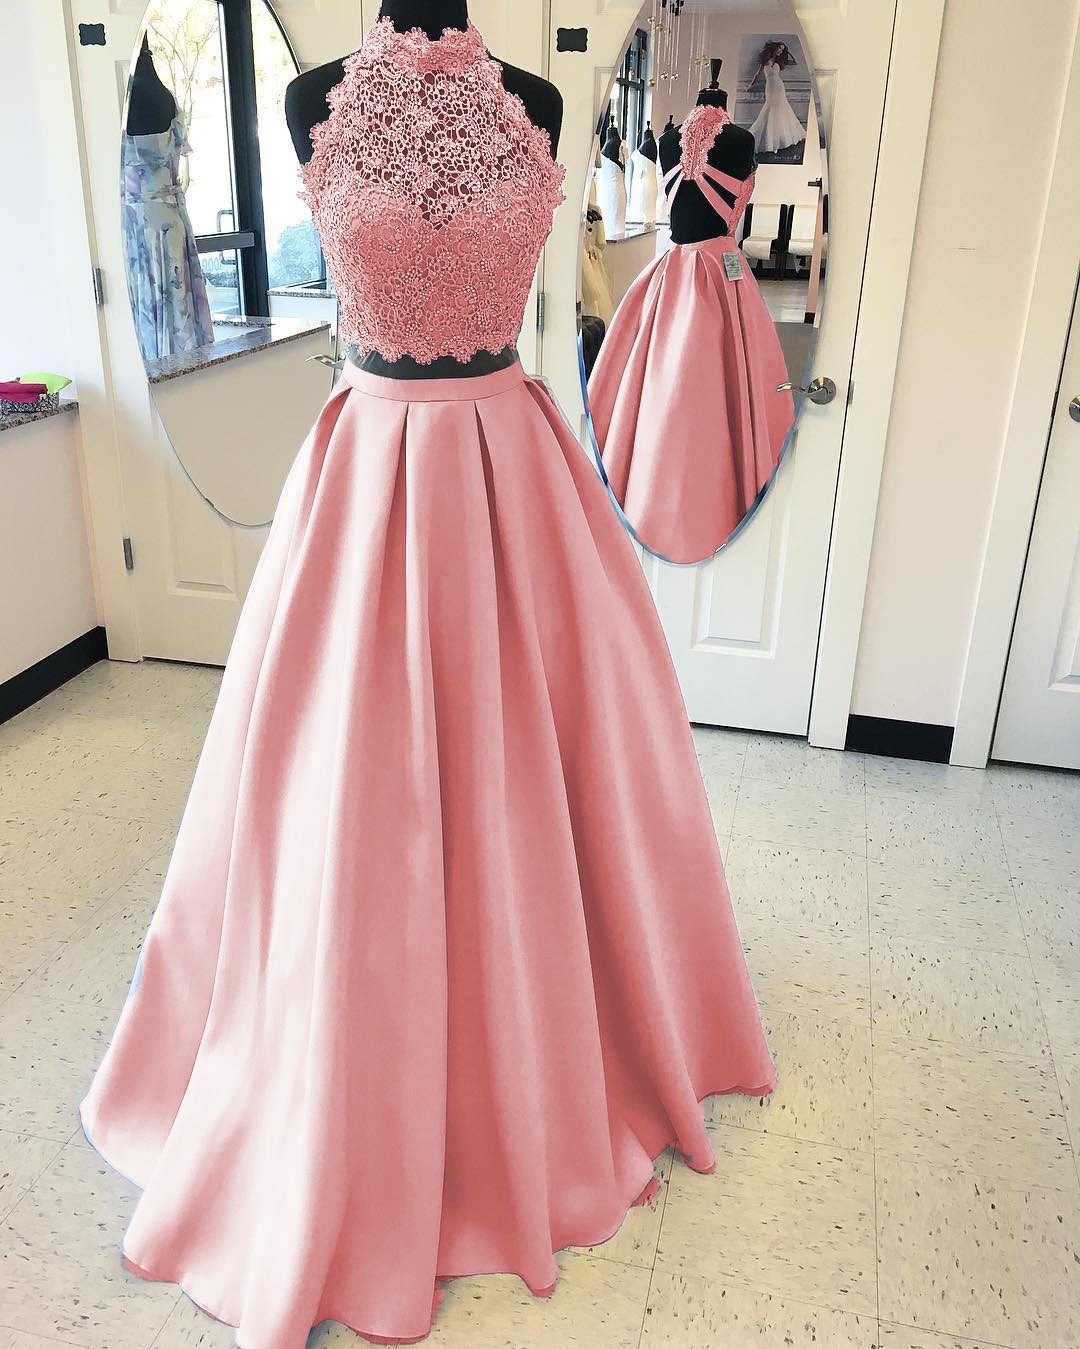 pink-prom-dresses